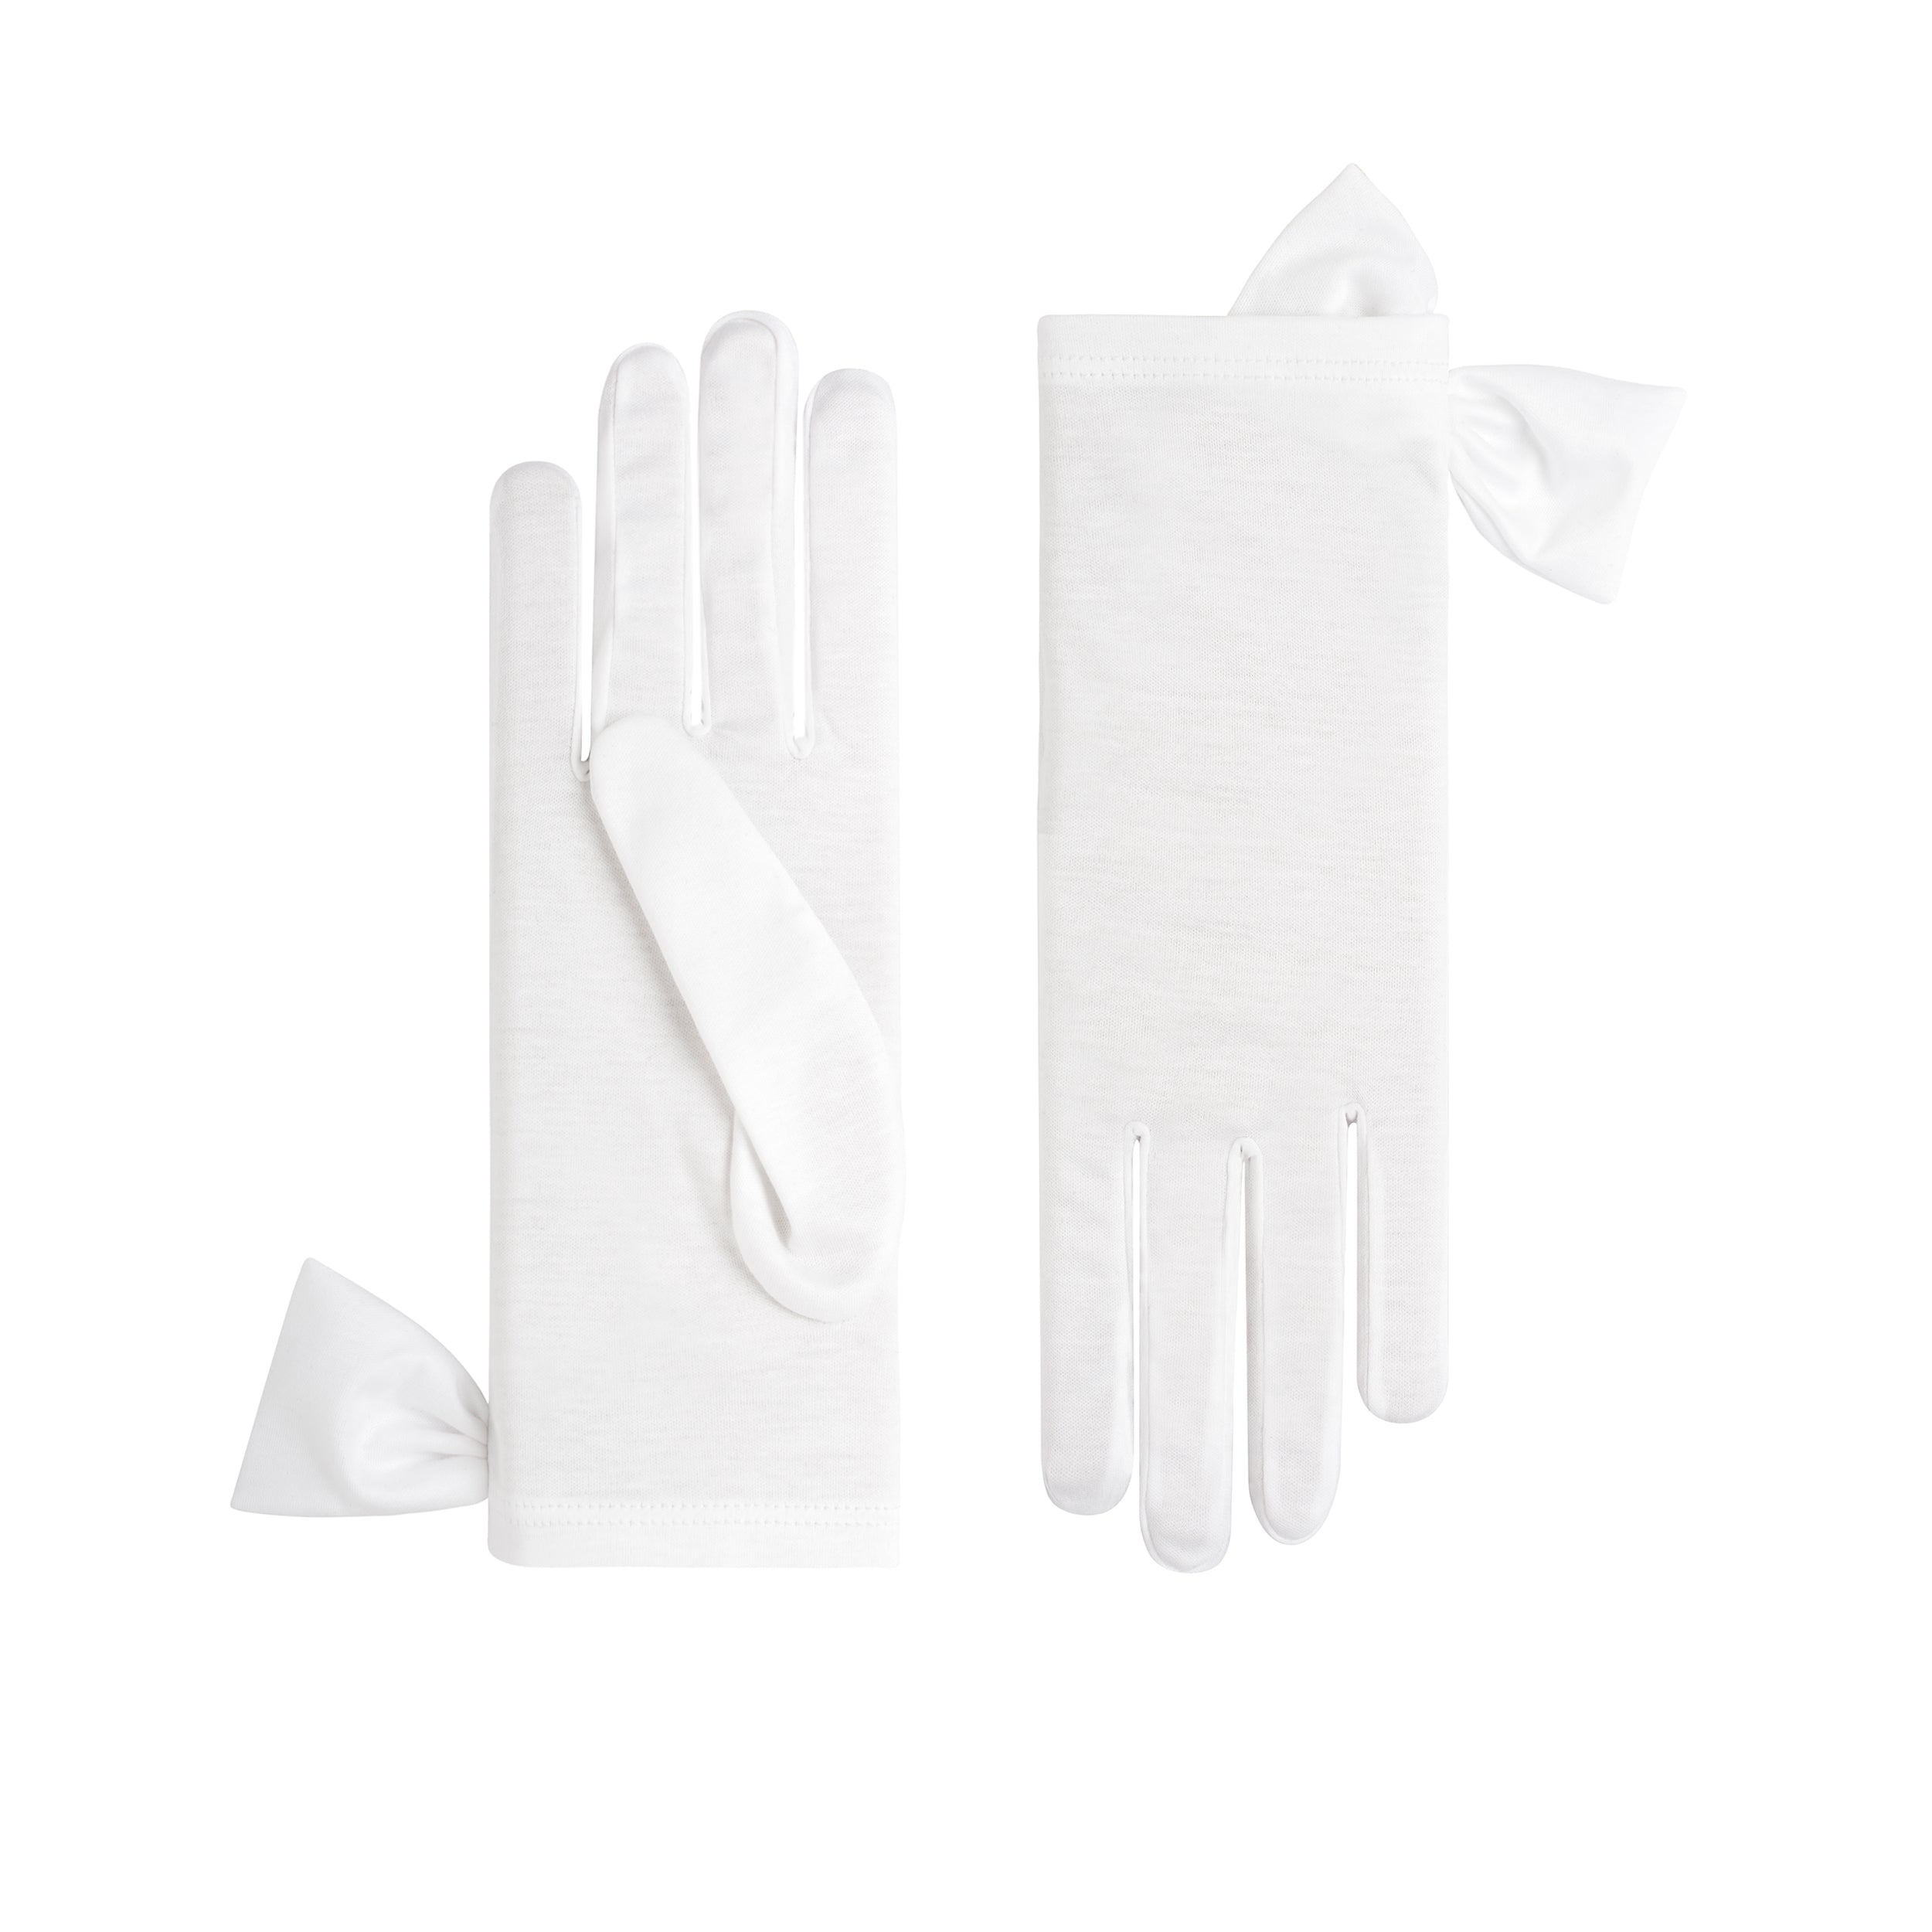 Cornelia James - Navy Blue Cotton Day Gloves - Genevieve - Size Medium (7 ½) - Handmade Cotton Gloves by Cornelia James